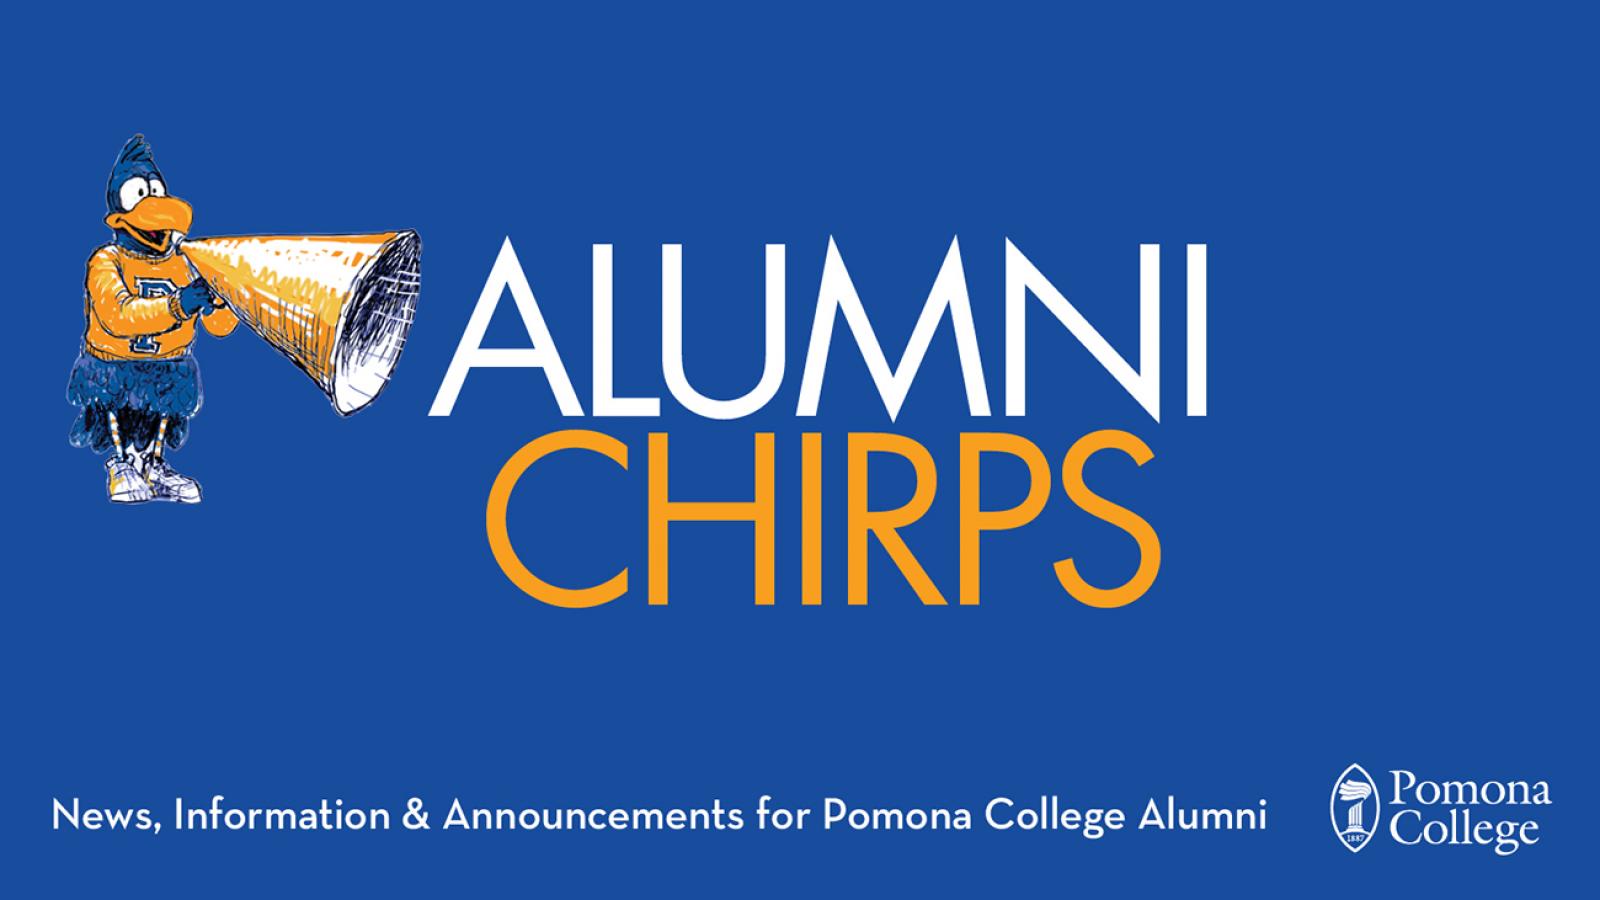 Alumni Chirps News, Information & Announcements for Pomona College Alumni